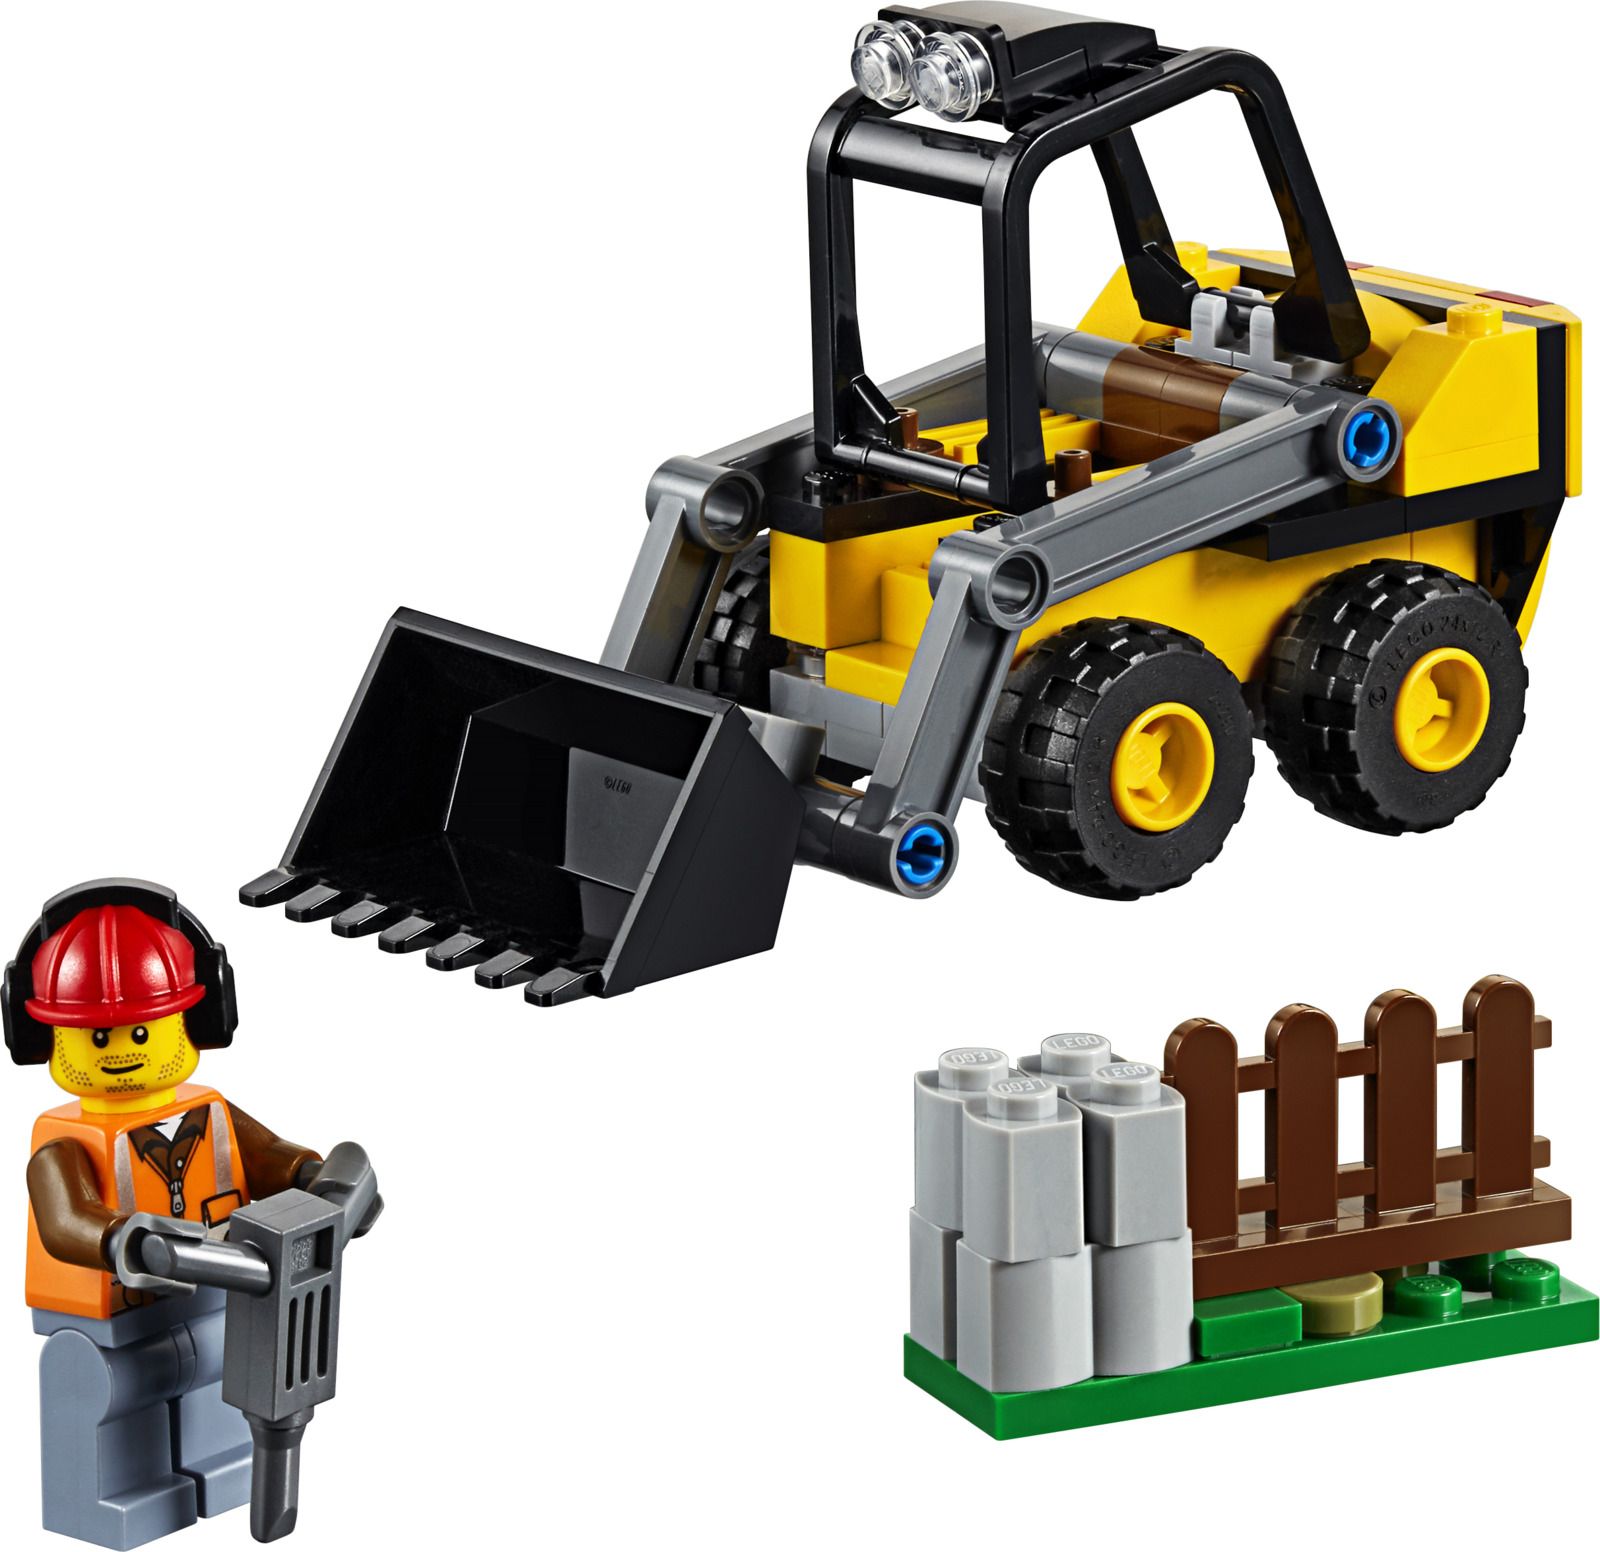 LEGO City Great Vehicles 60219   